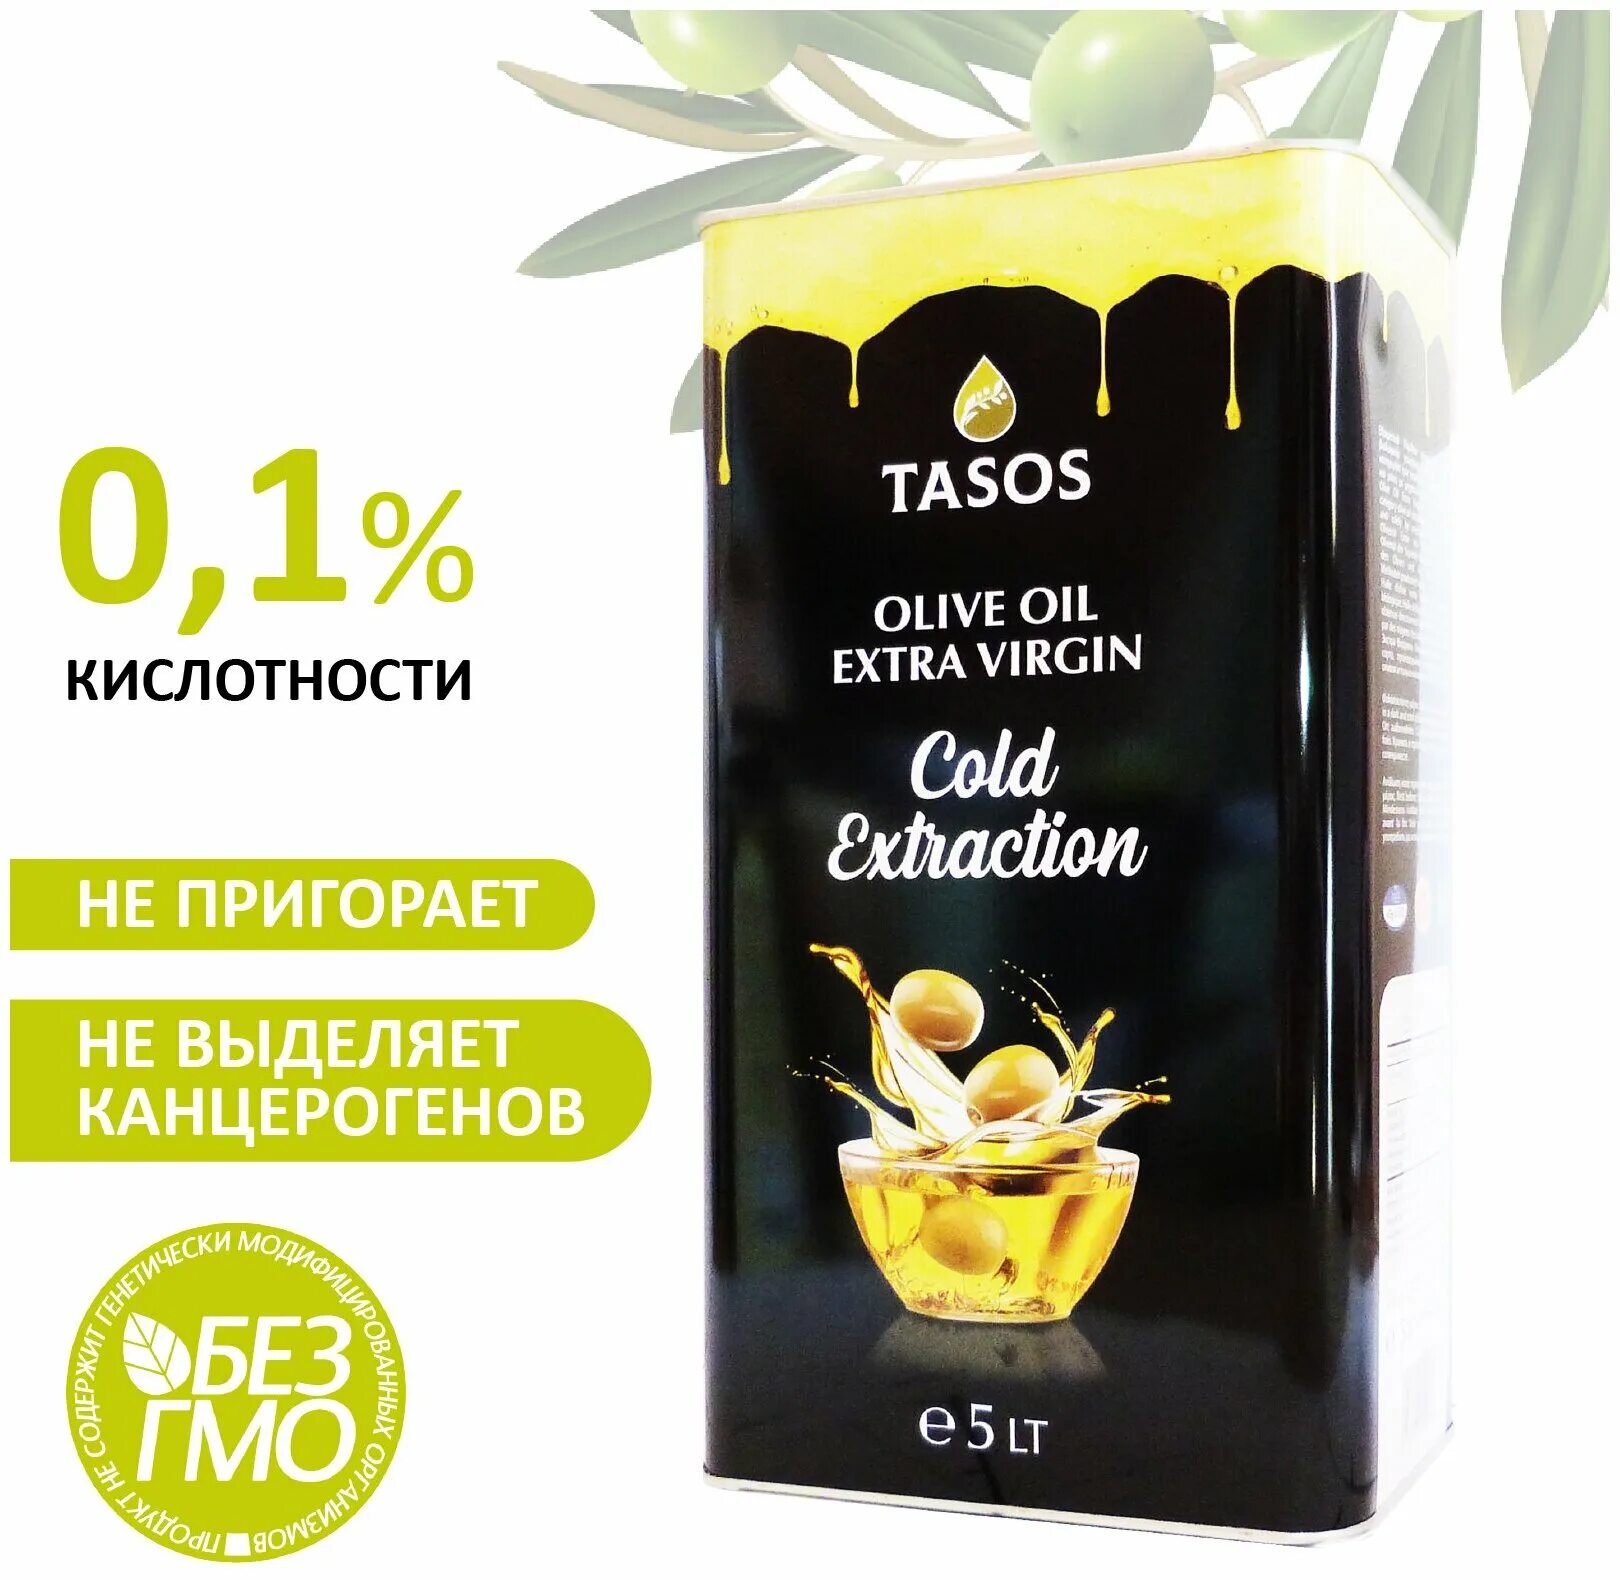 Tasos масло оливковое. Tasos масло оливковое 5 литров. Салат с маслом. Масло оливковое Extra Virgin Oliva Oil 5 литр.